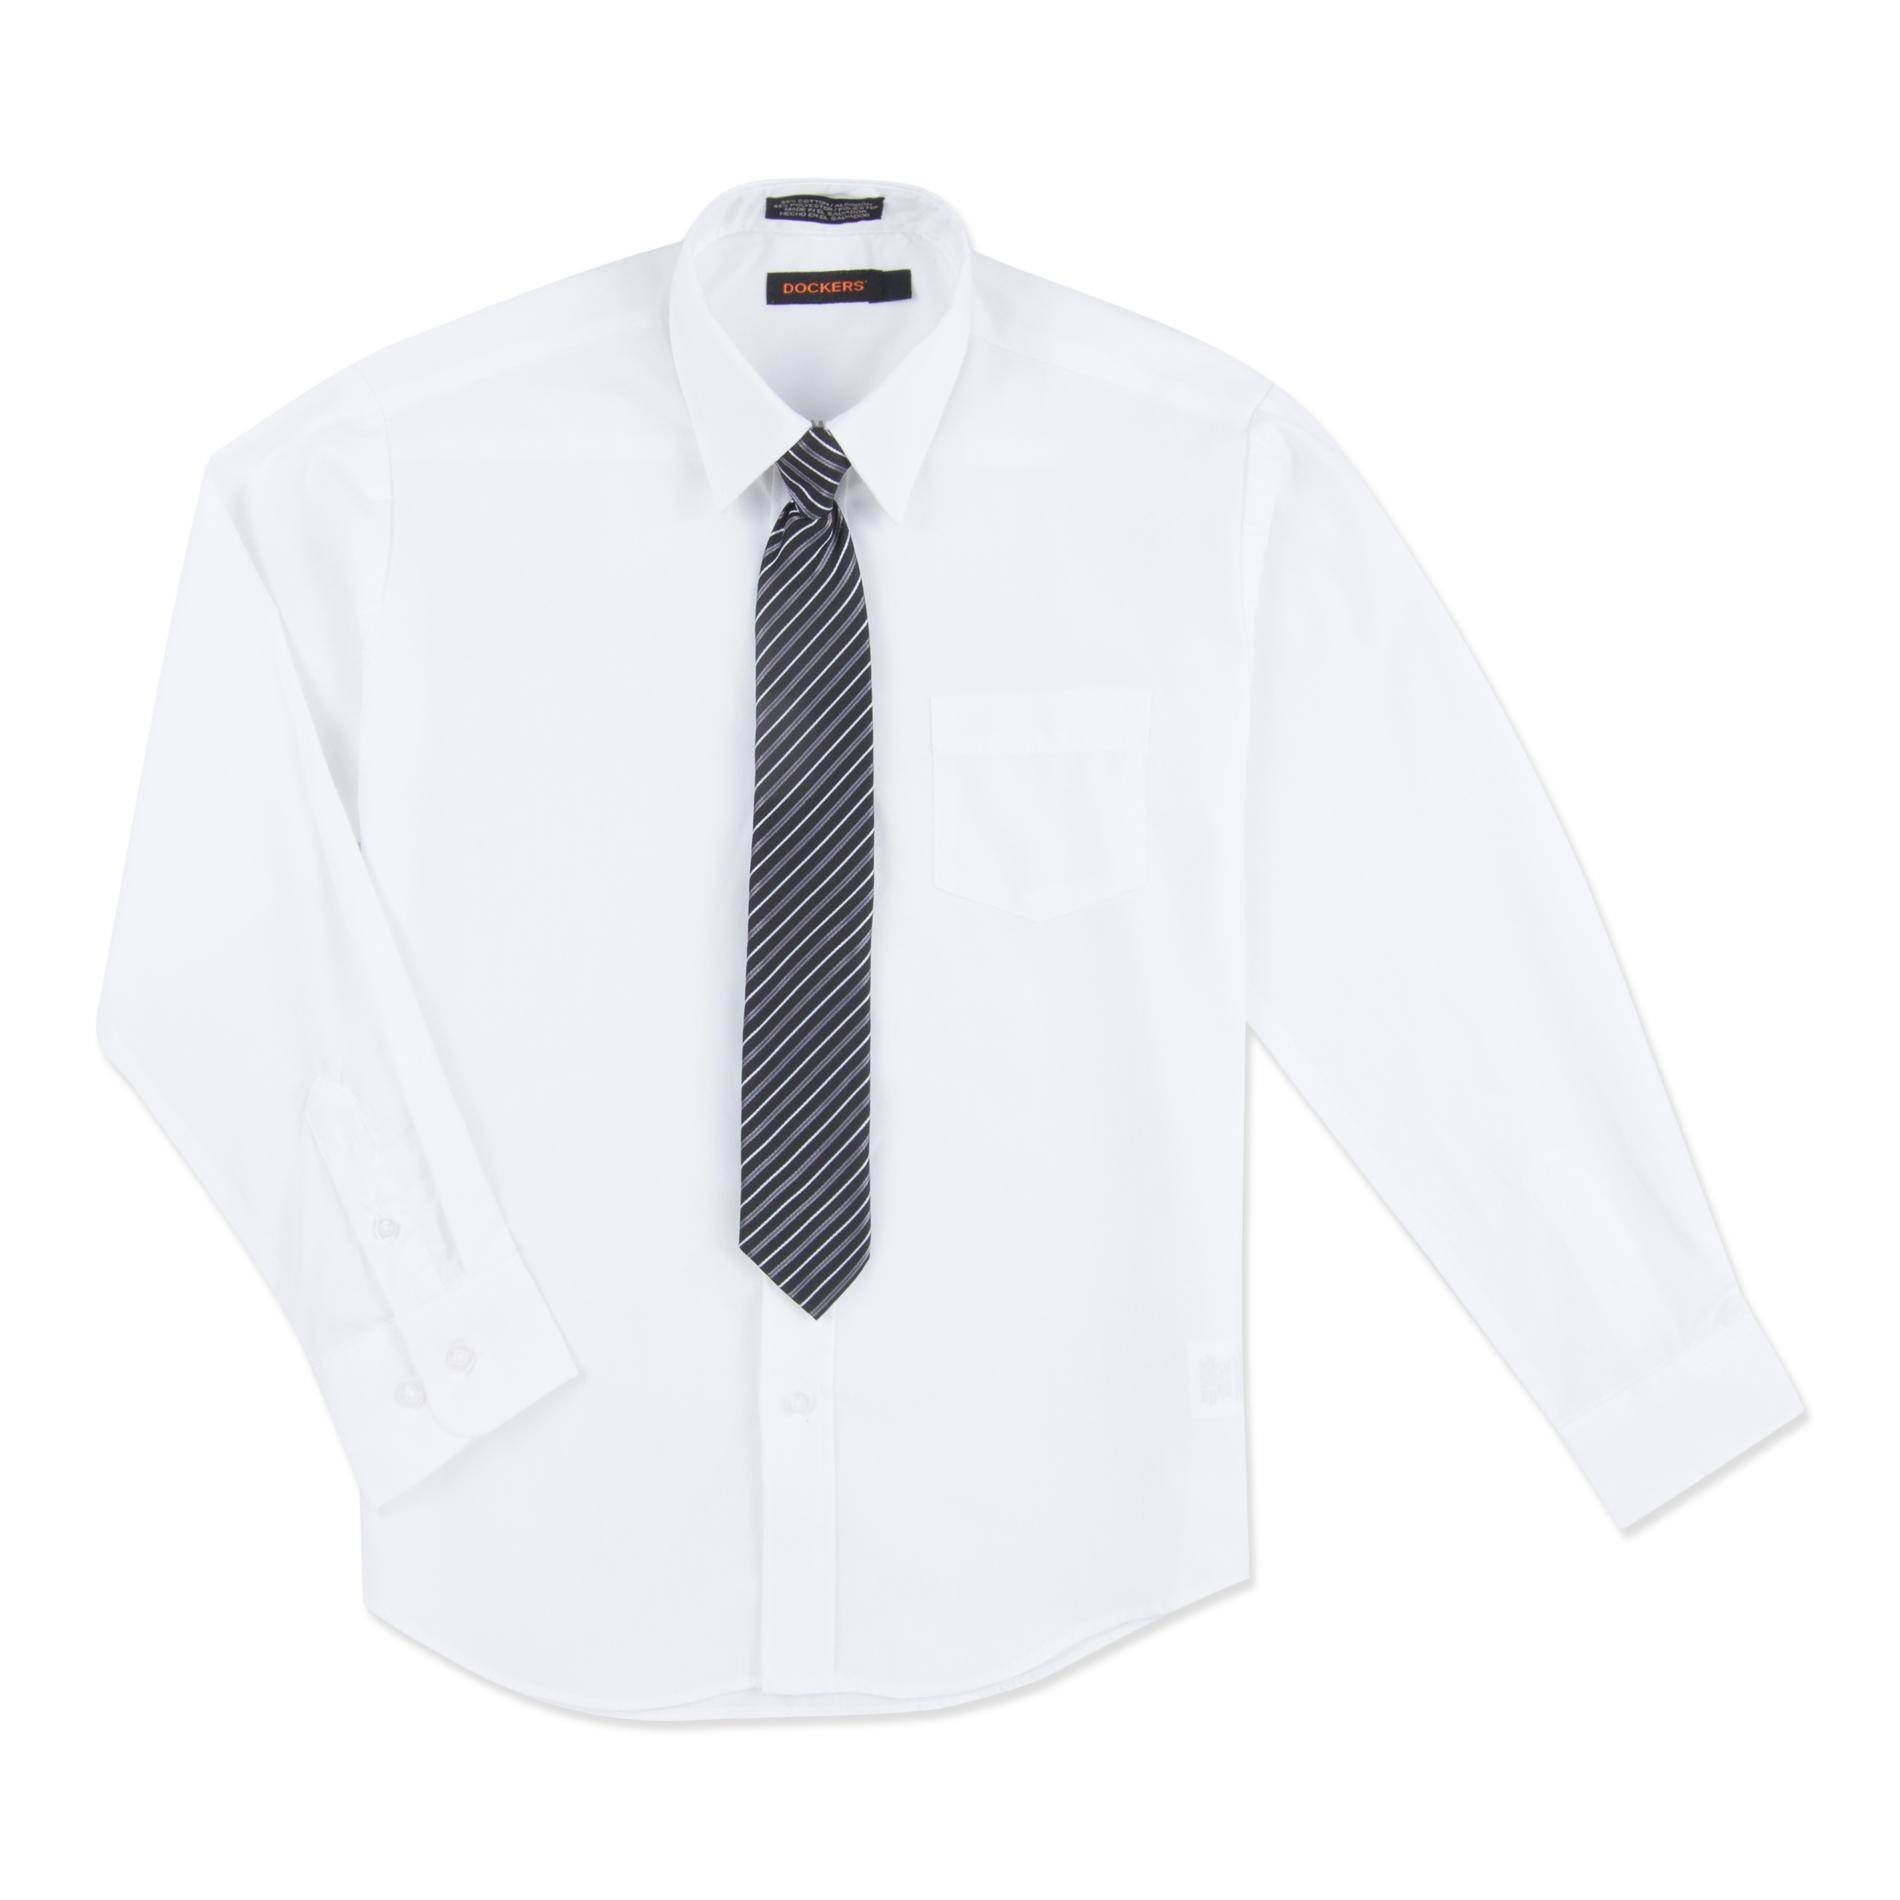 Dockers Boy's Dress Shirt & Necktie - Striped